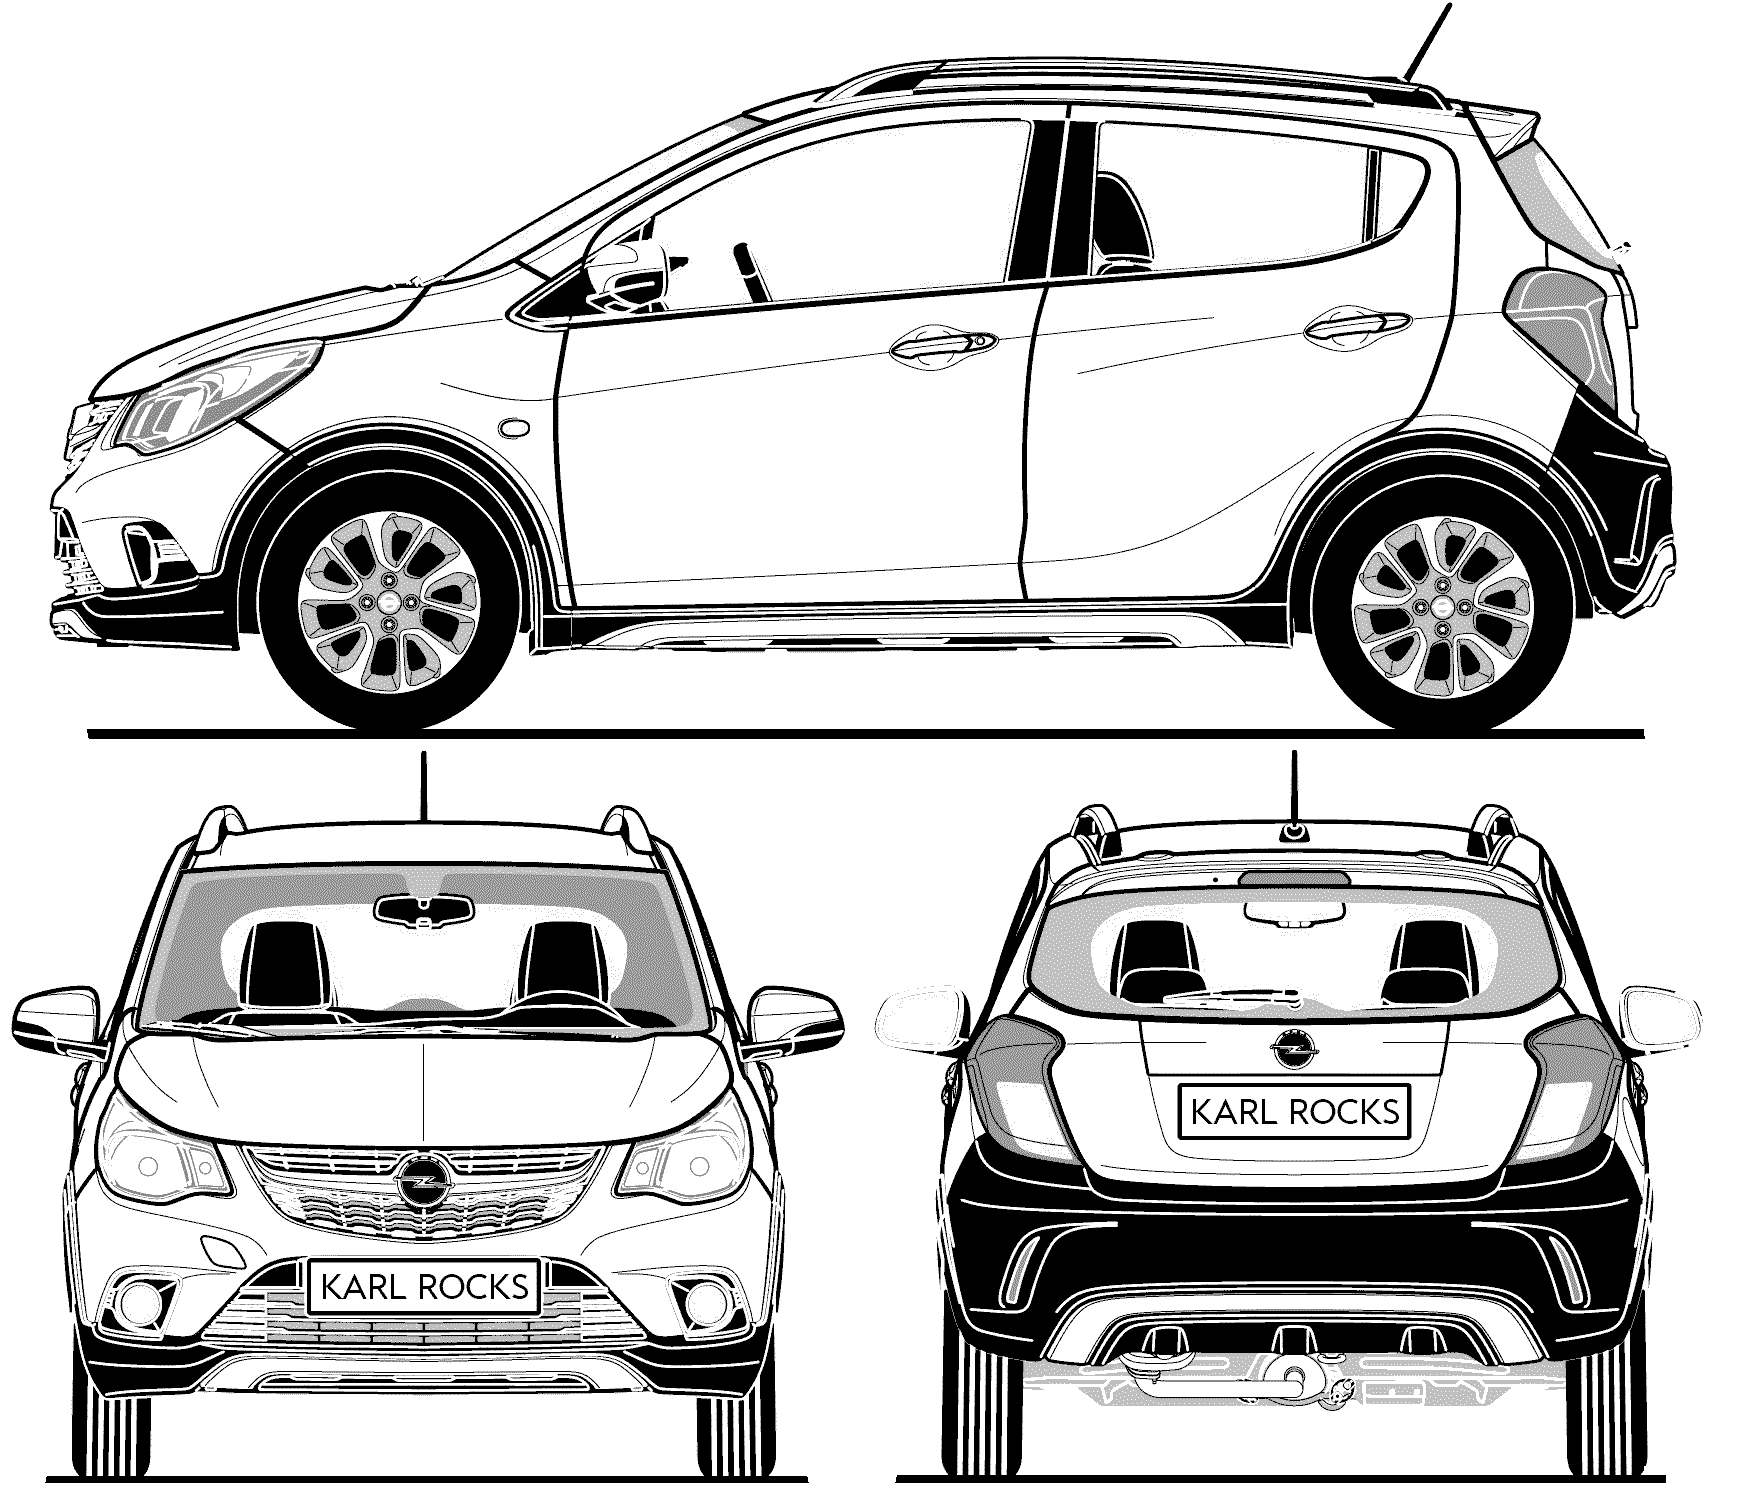 Opel Karl Rocks blueprint